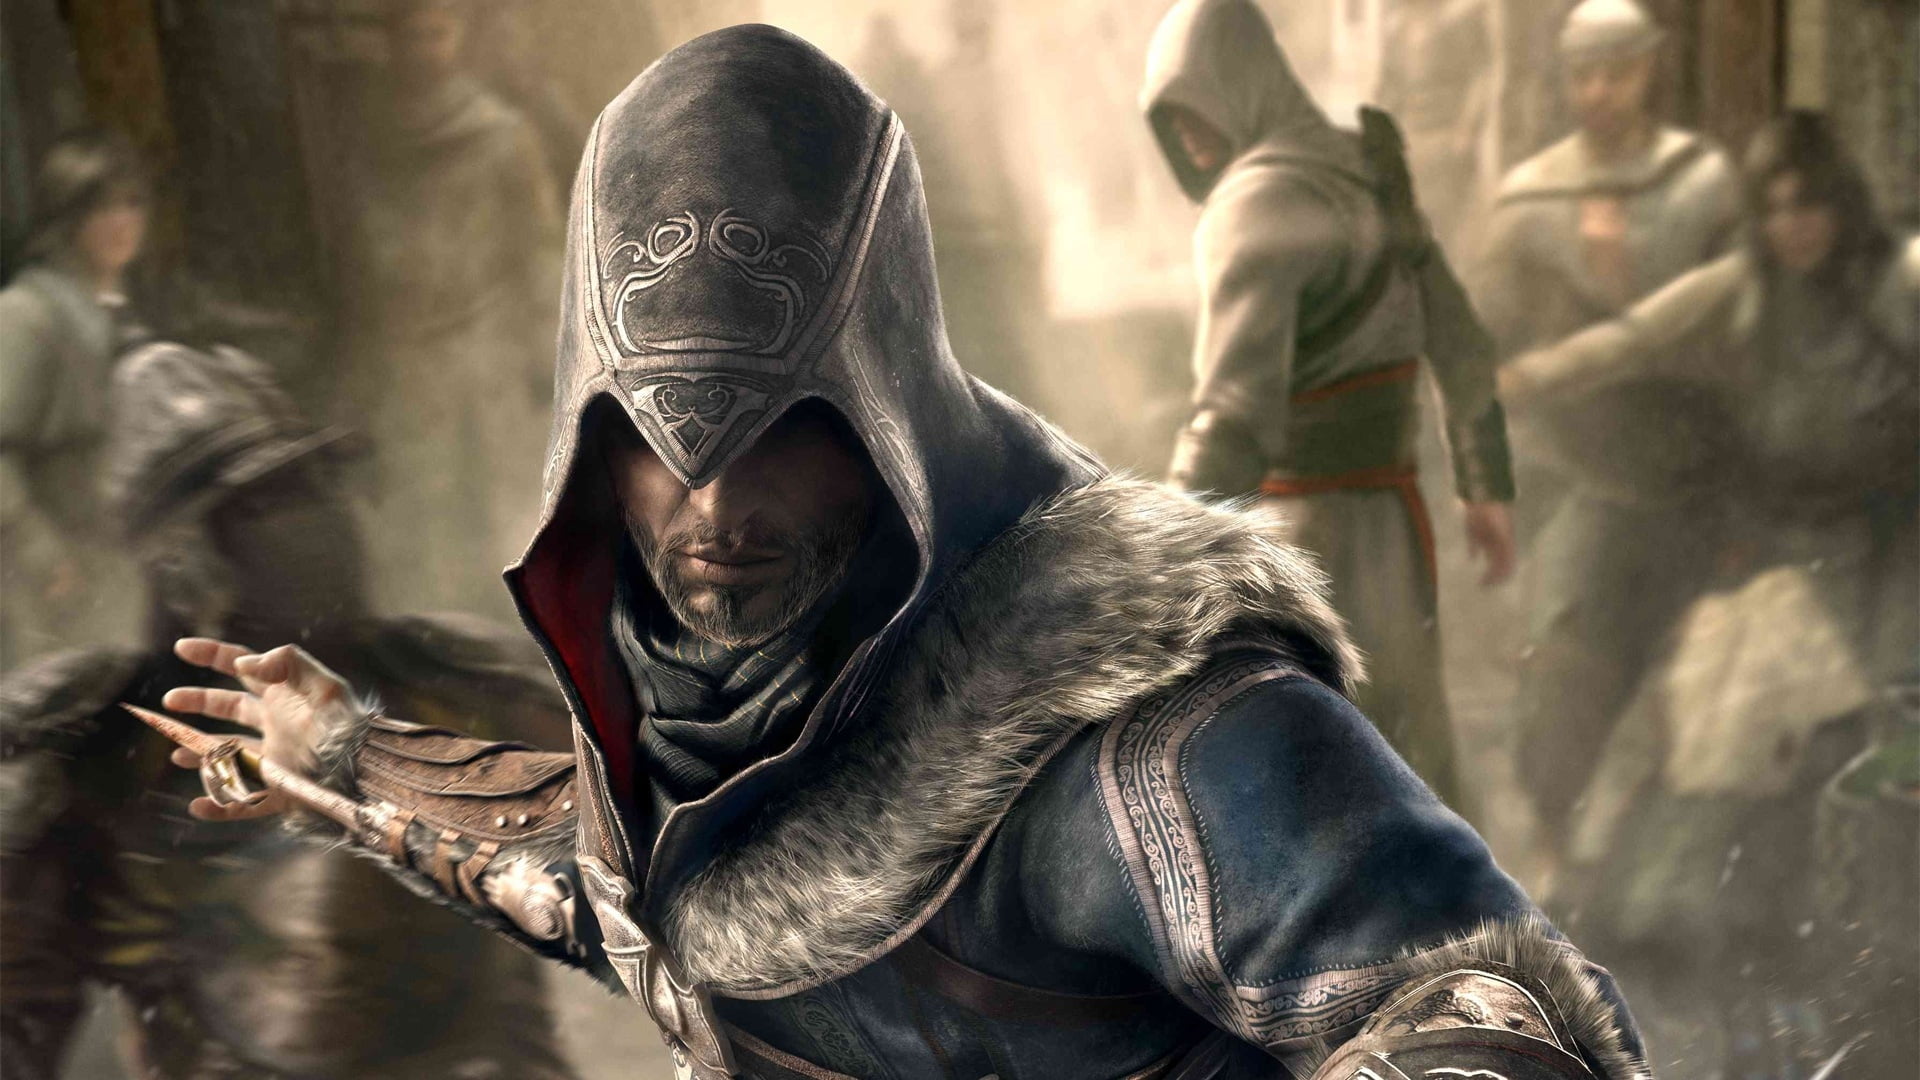 Assassin's Creed digital wallpaper, assassins creed, desmond miles